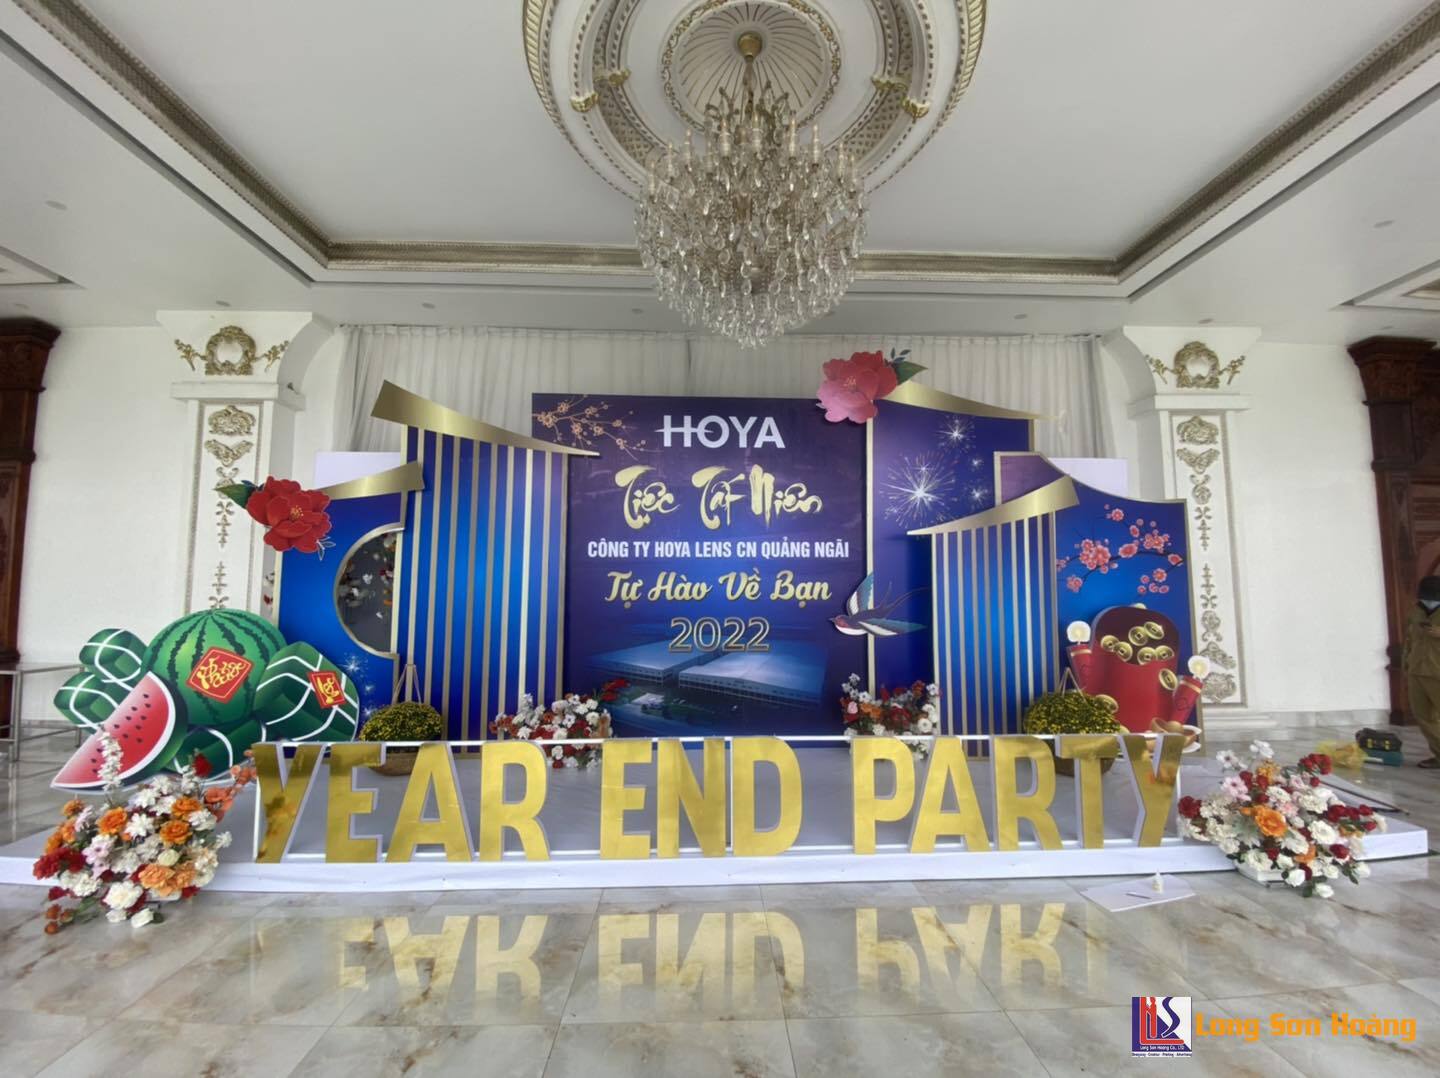 YEAR END PARTY - HOYA LENS VSIP QUẢNG NGÃI